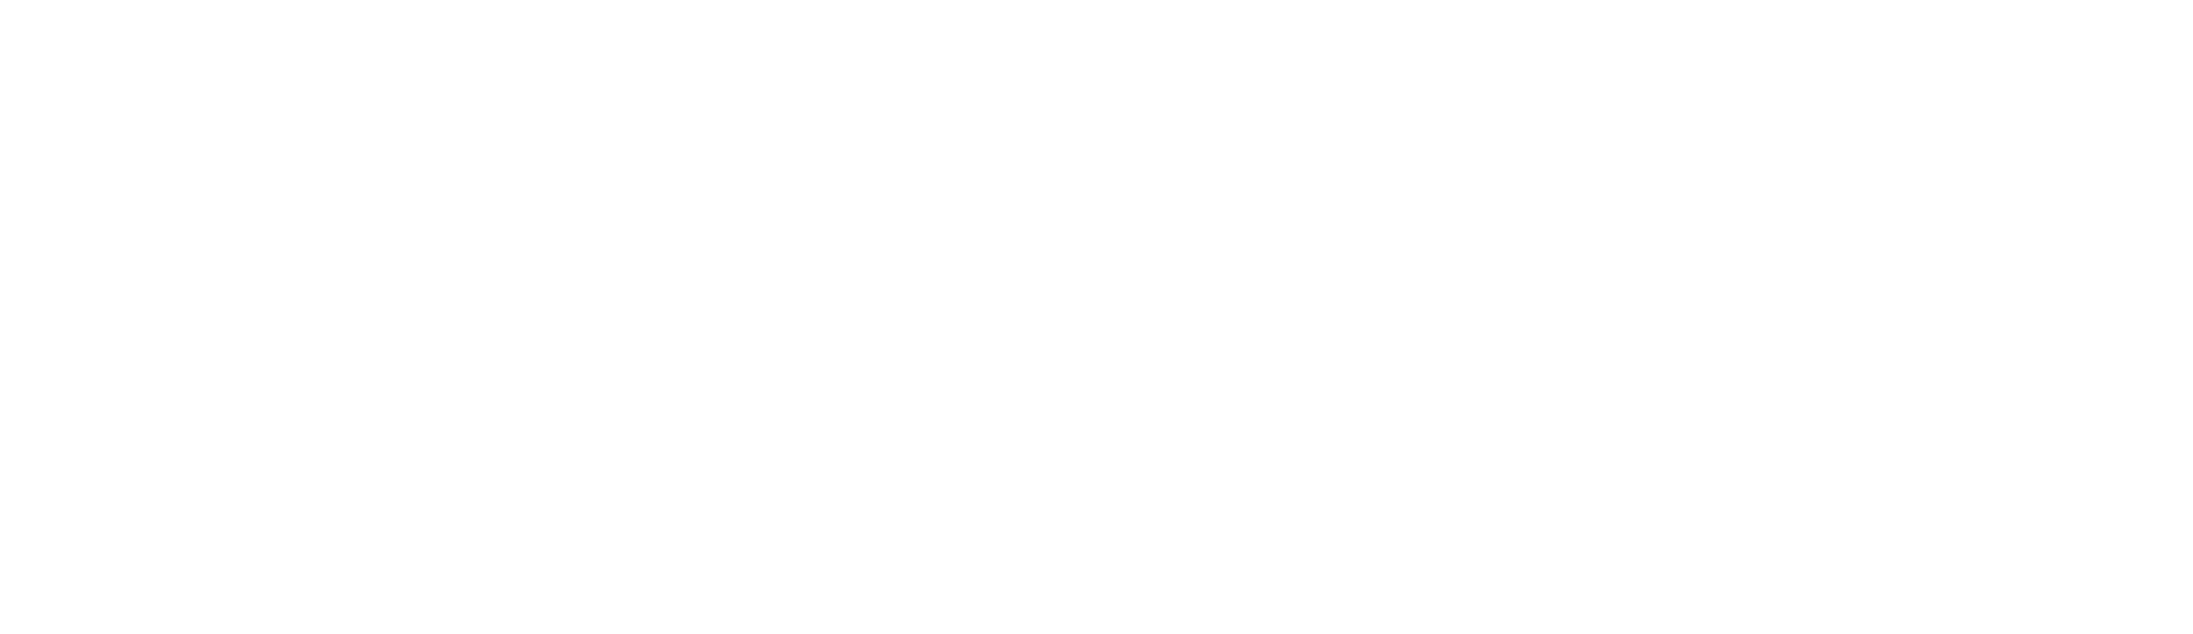 Cartology - A Custom Amazon Services Agency